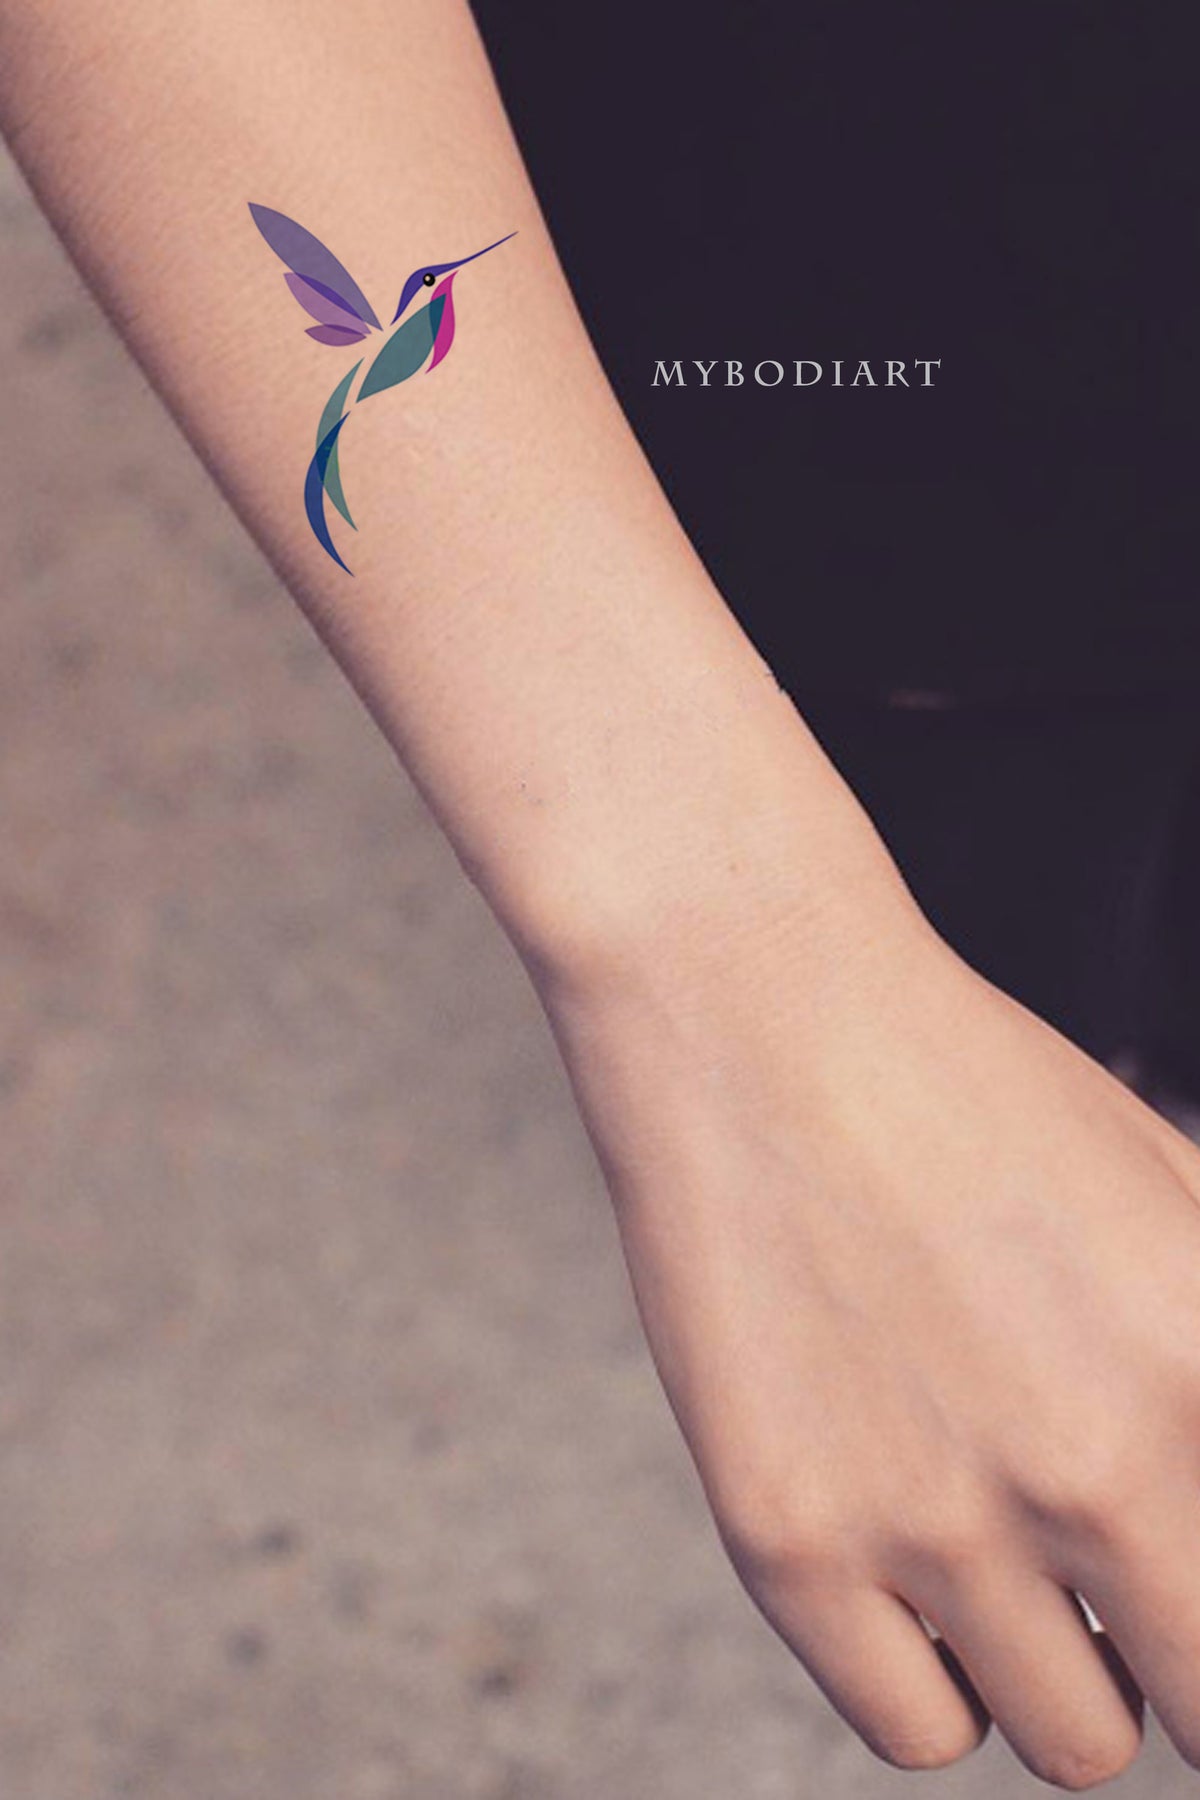 Share 151+ colorful wrist tattoos super hot